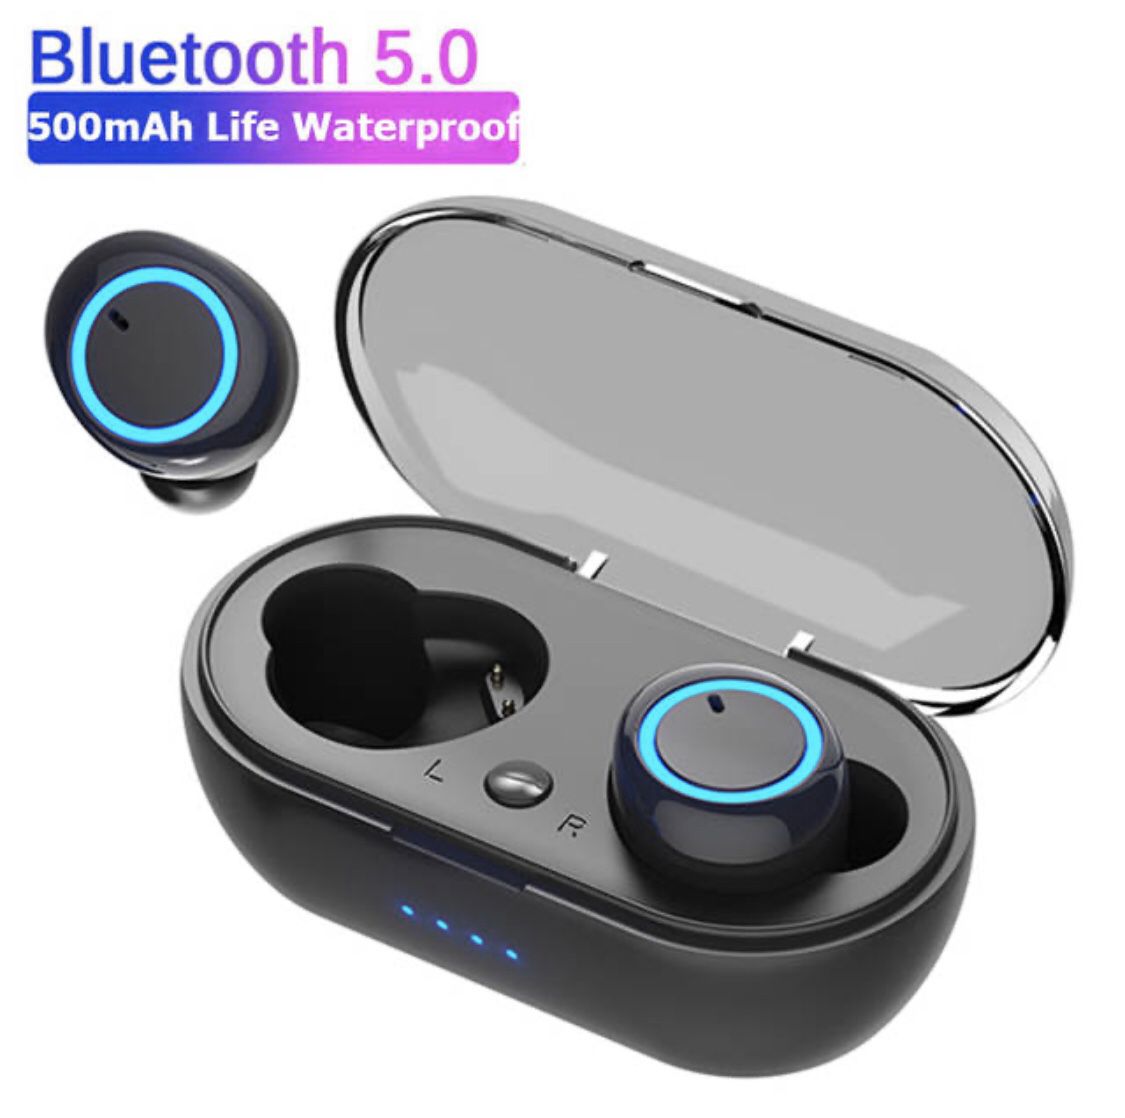 Fingerprint Touch Bluetooth Earphones HD Stereo Wireless Headphones Noise Cancelling